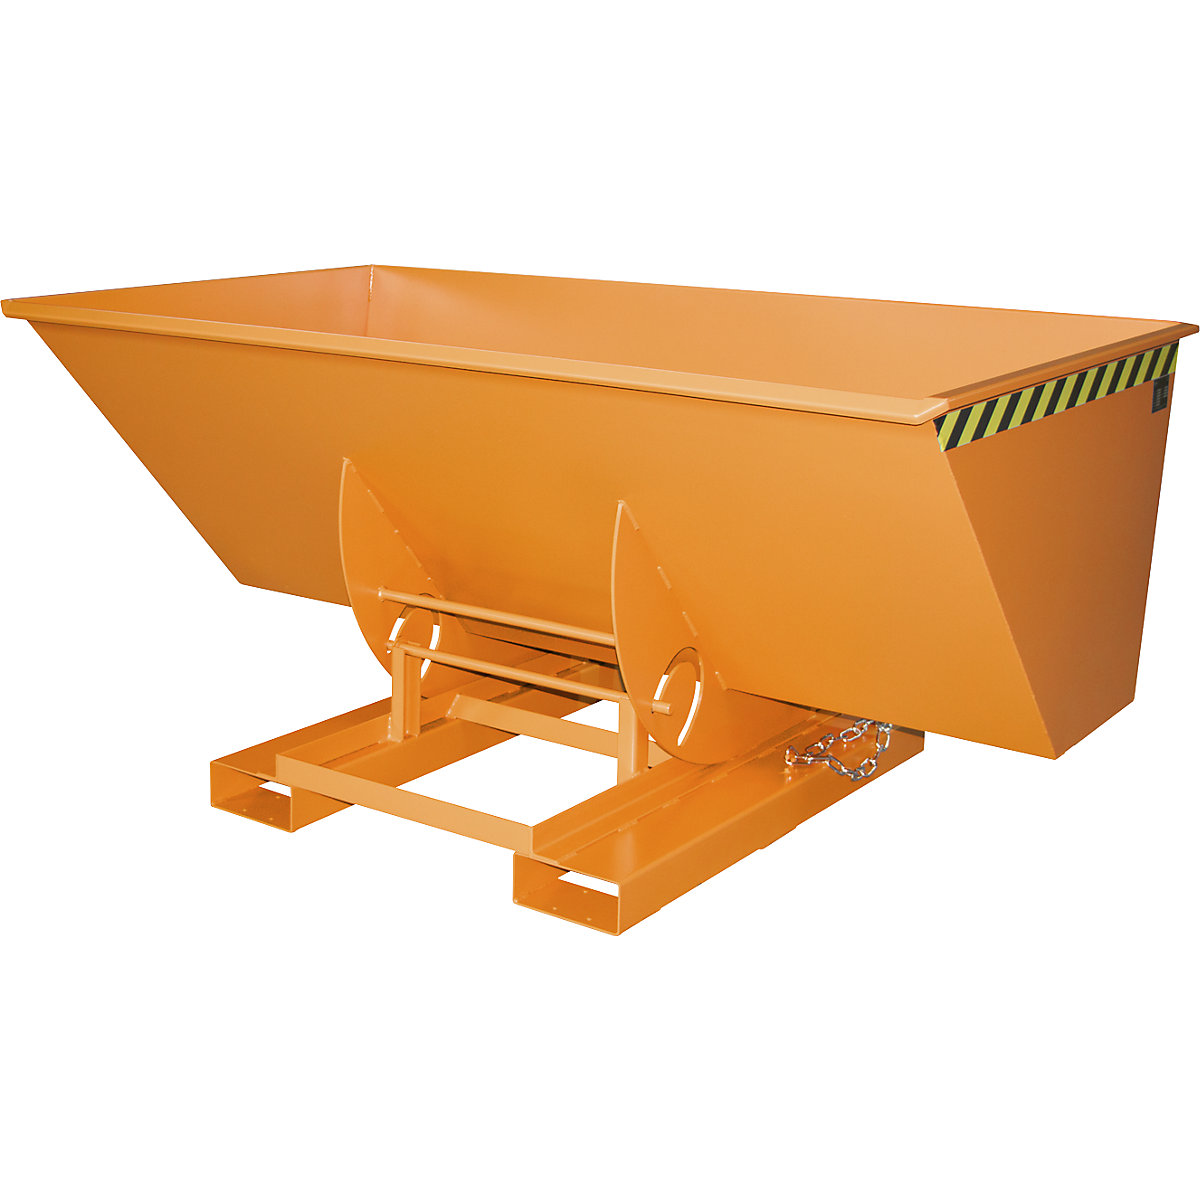 Benne basculante AK – eurokraft pro, capacité 1,5 m³, orange jaune-4